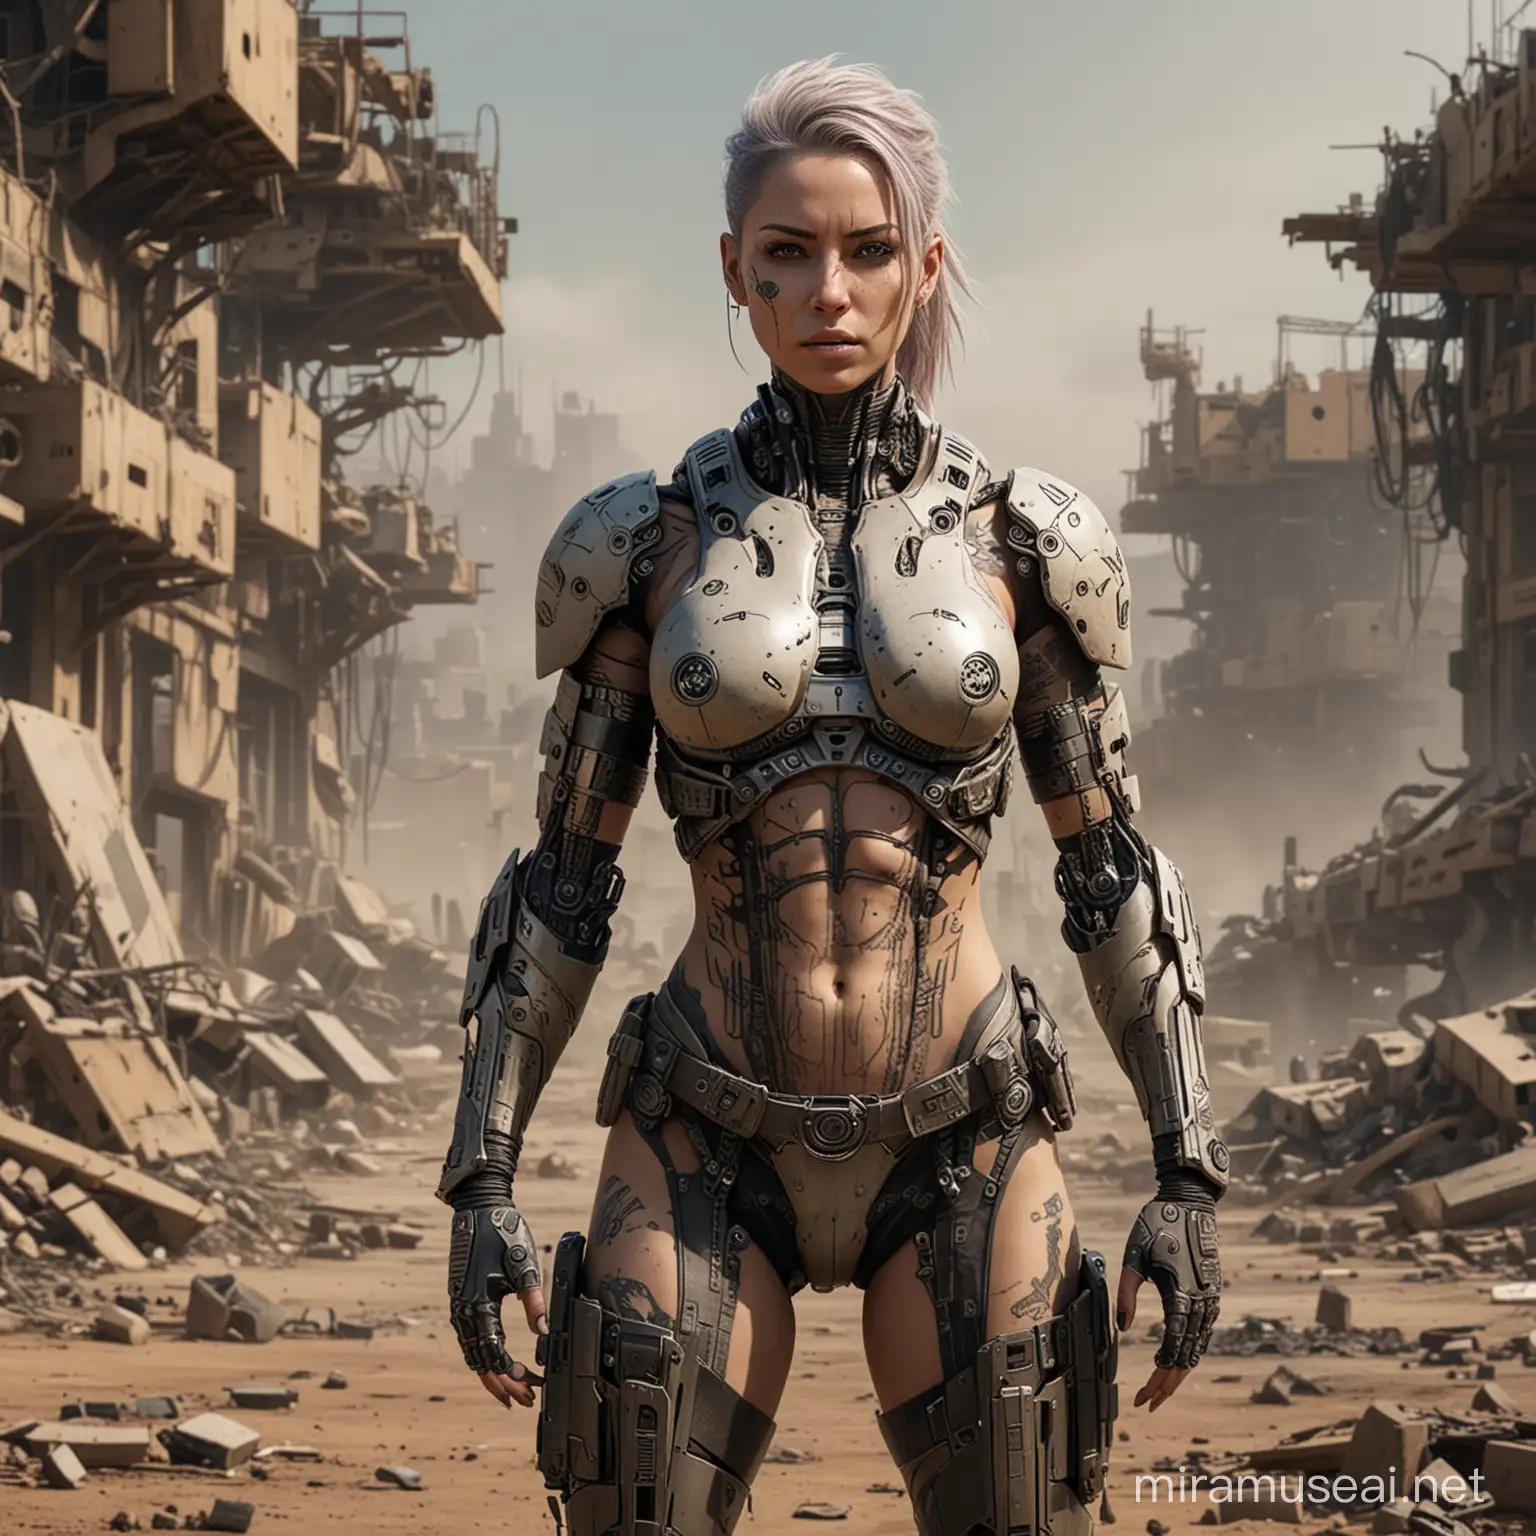 Cybernetic Female Warrior in PostApocalyptic Warzone